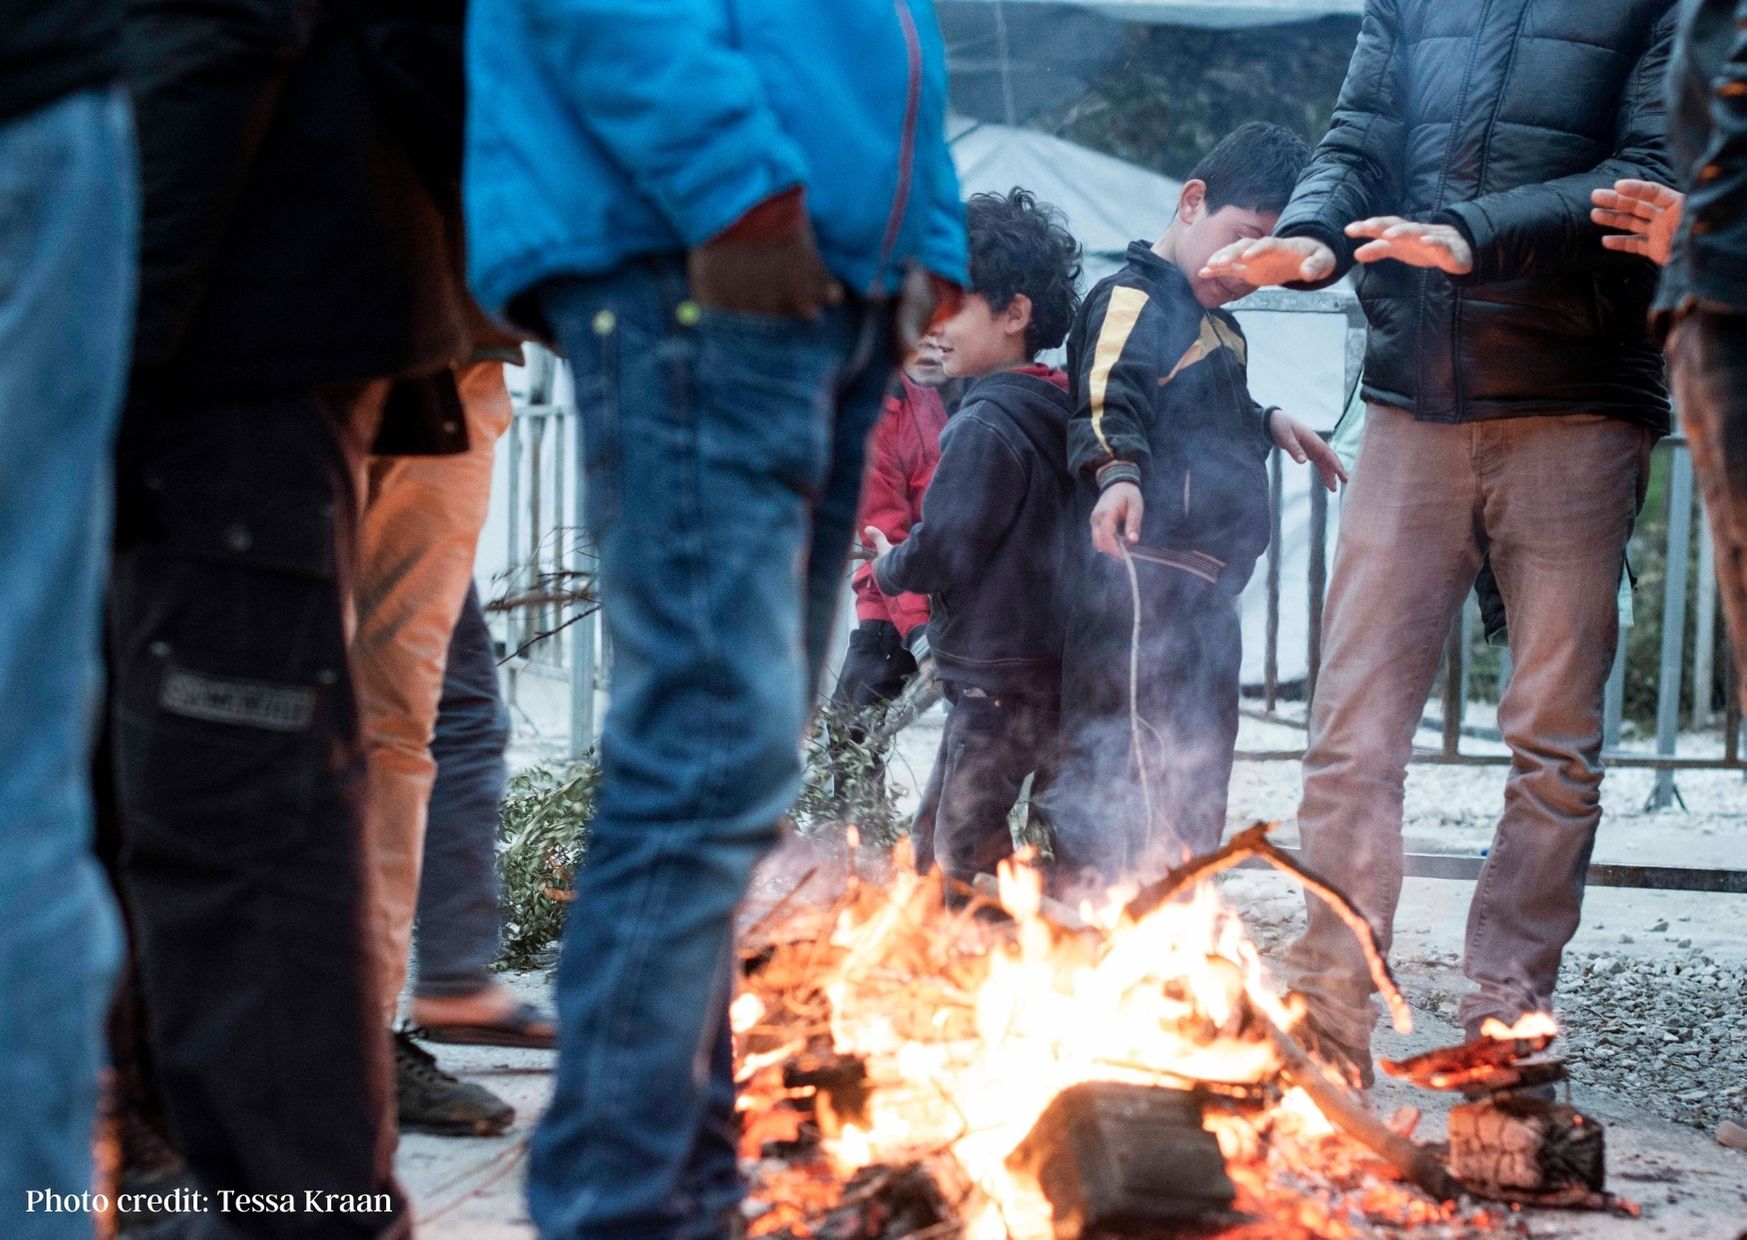 Men and children around a fire to warm up